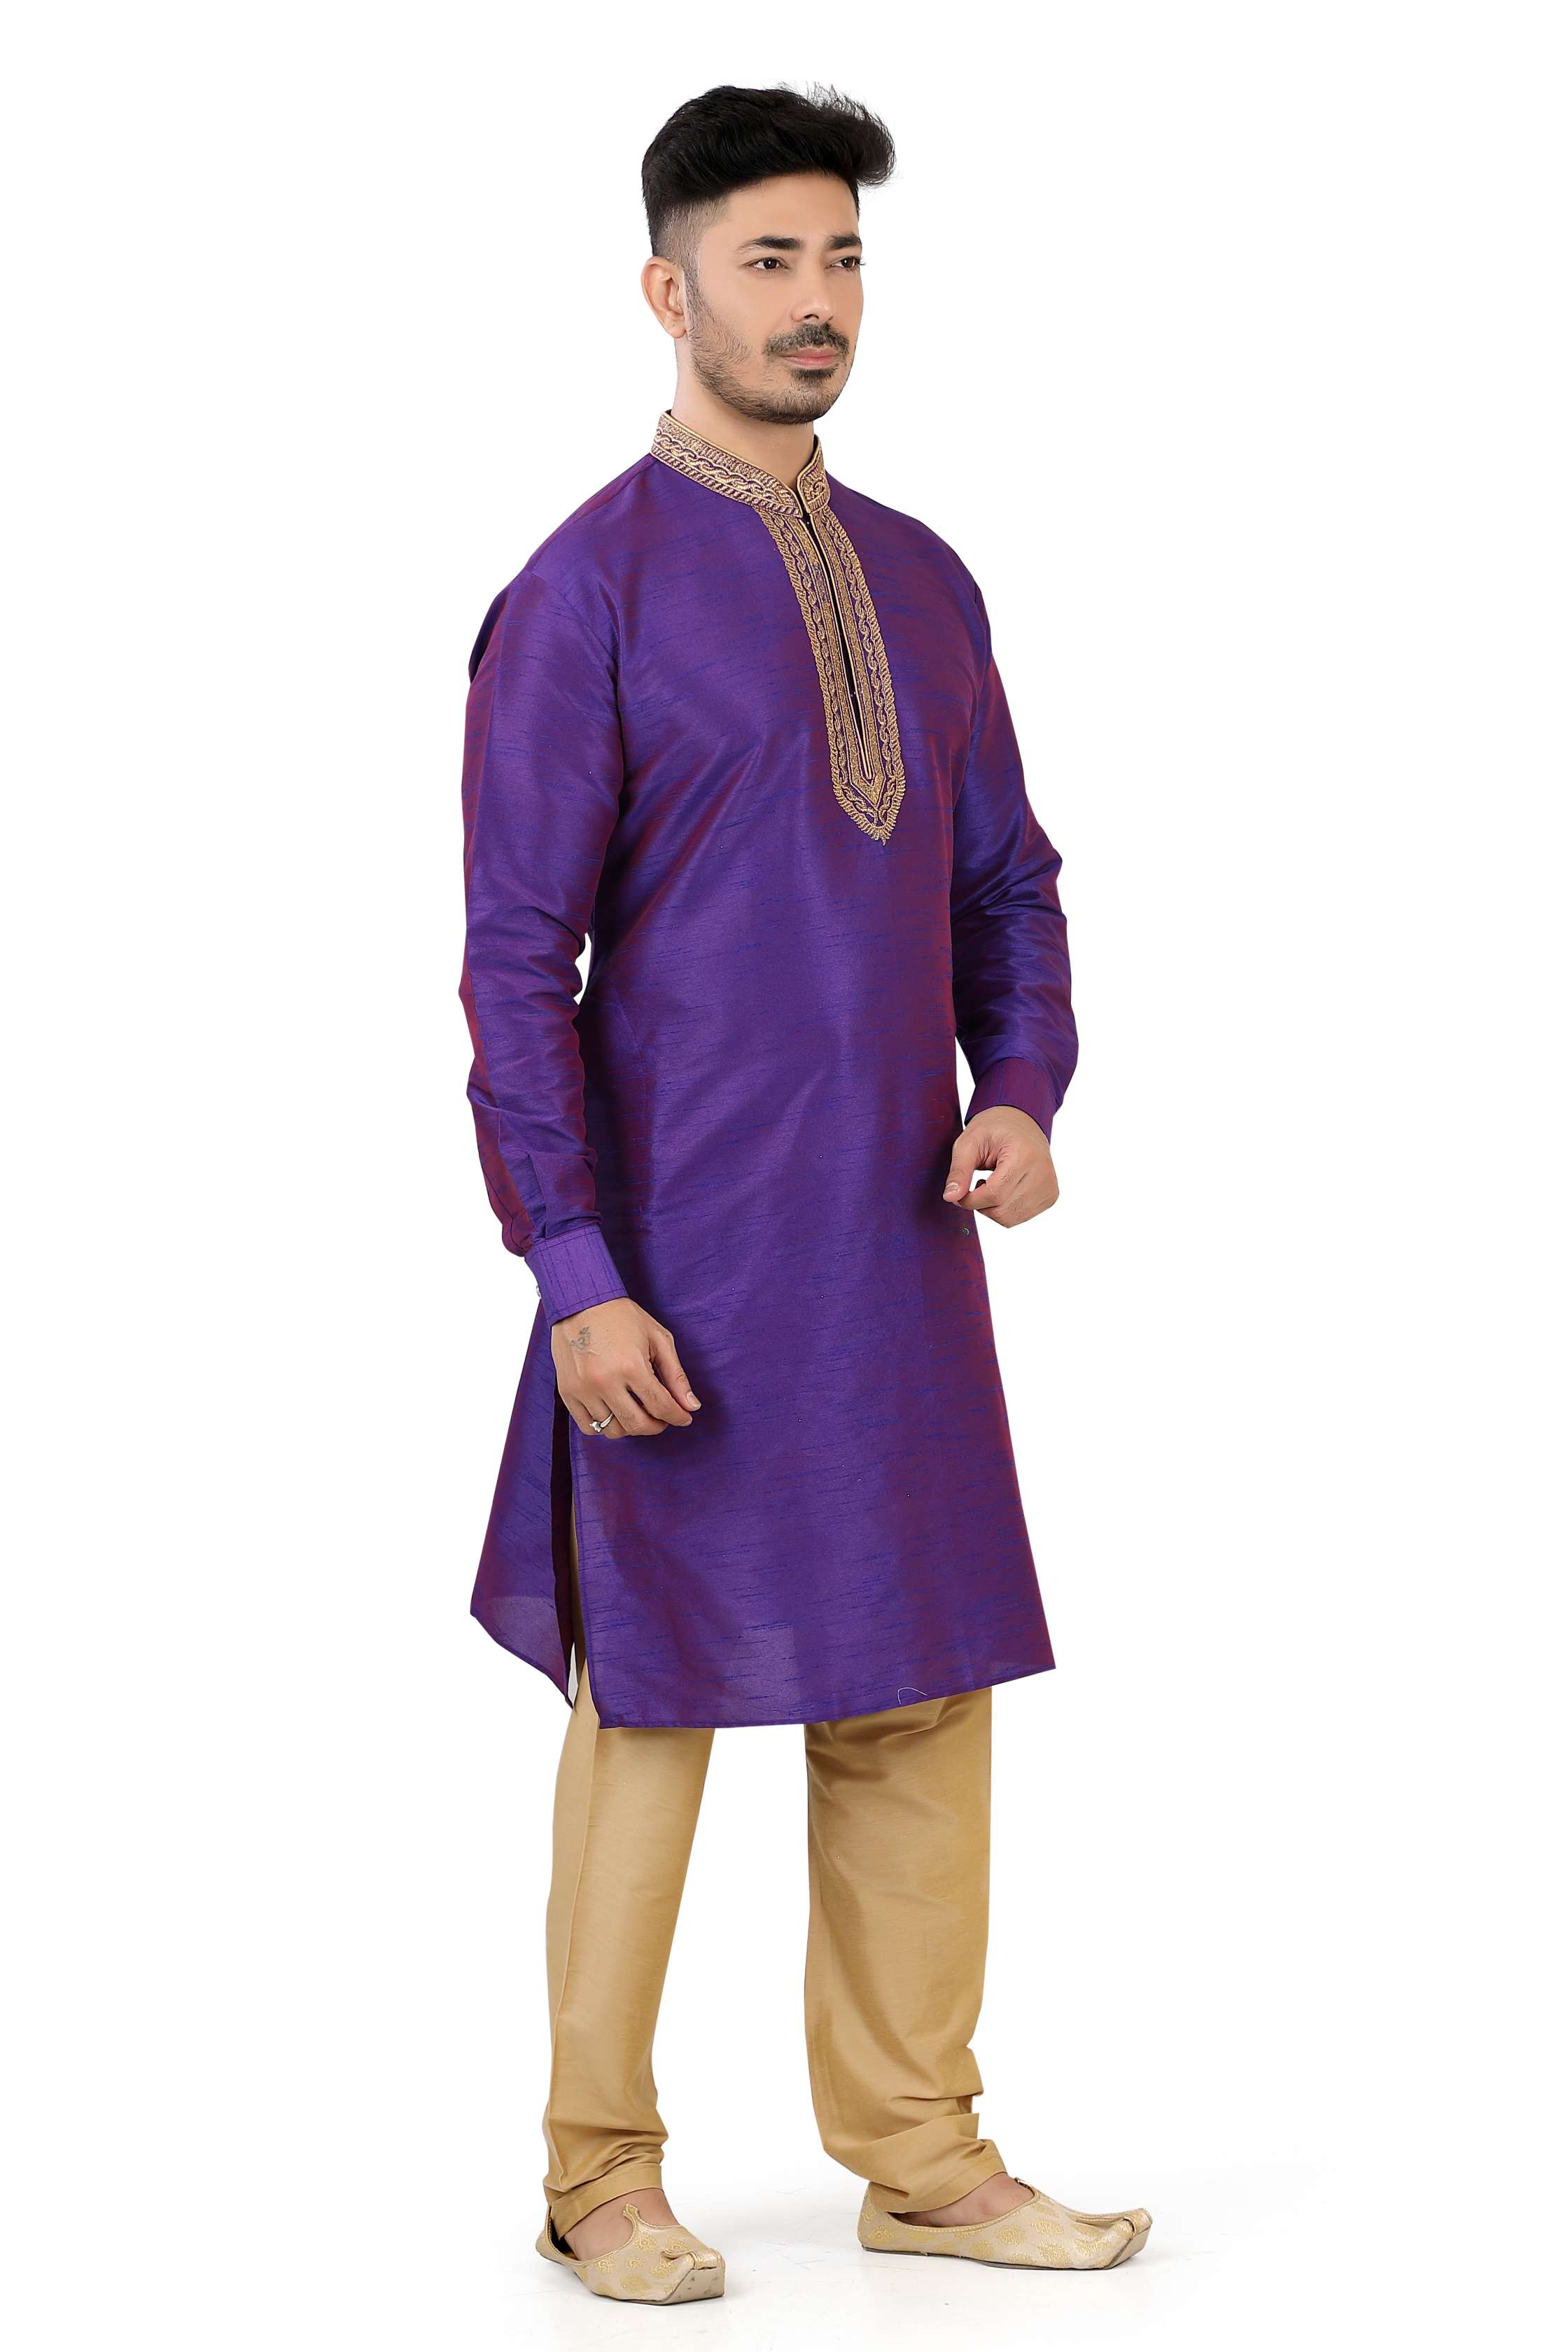 Banarasi Dupion Silk Kurta pajama set in Cadbury Purple - Premium kurta pajama from Dapper Ethnic - Just $75! Shop now at Dulhan Exclusives